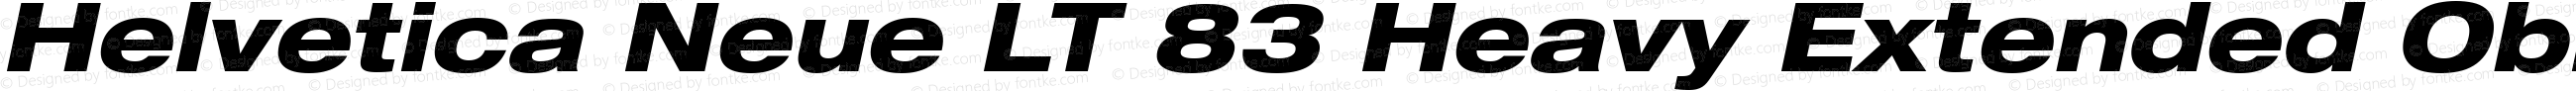 Helvetica Neue LT 83 Heavy Extended Oblique